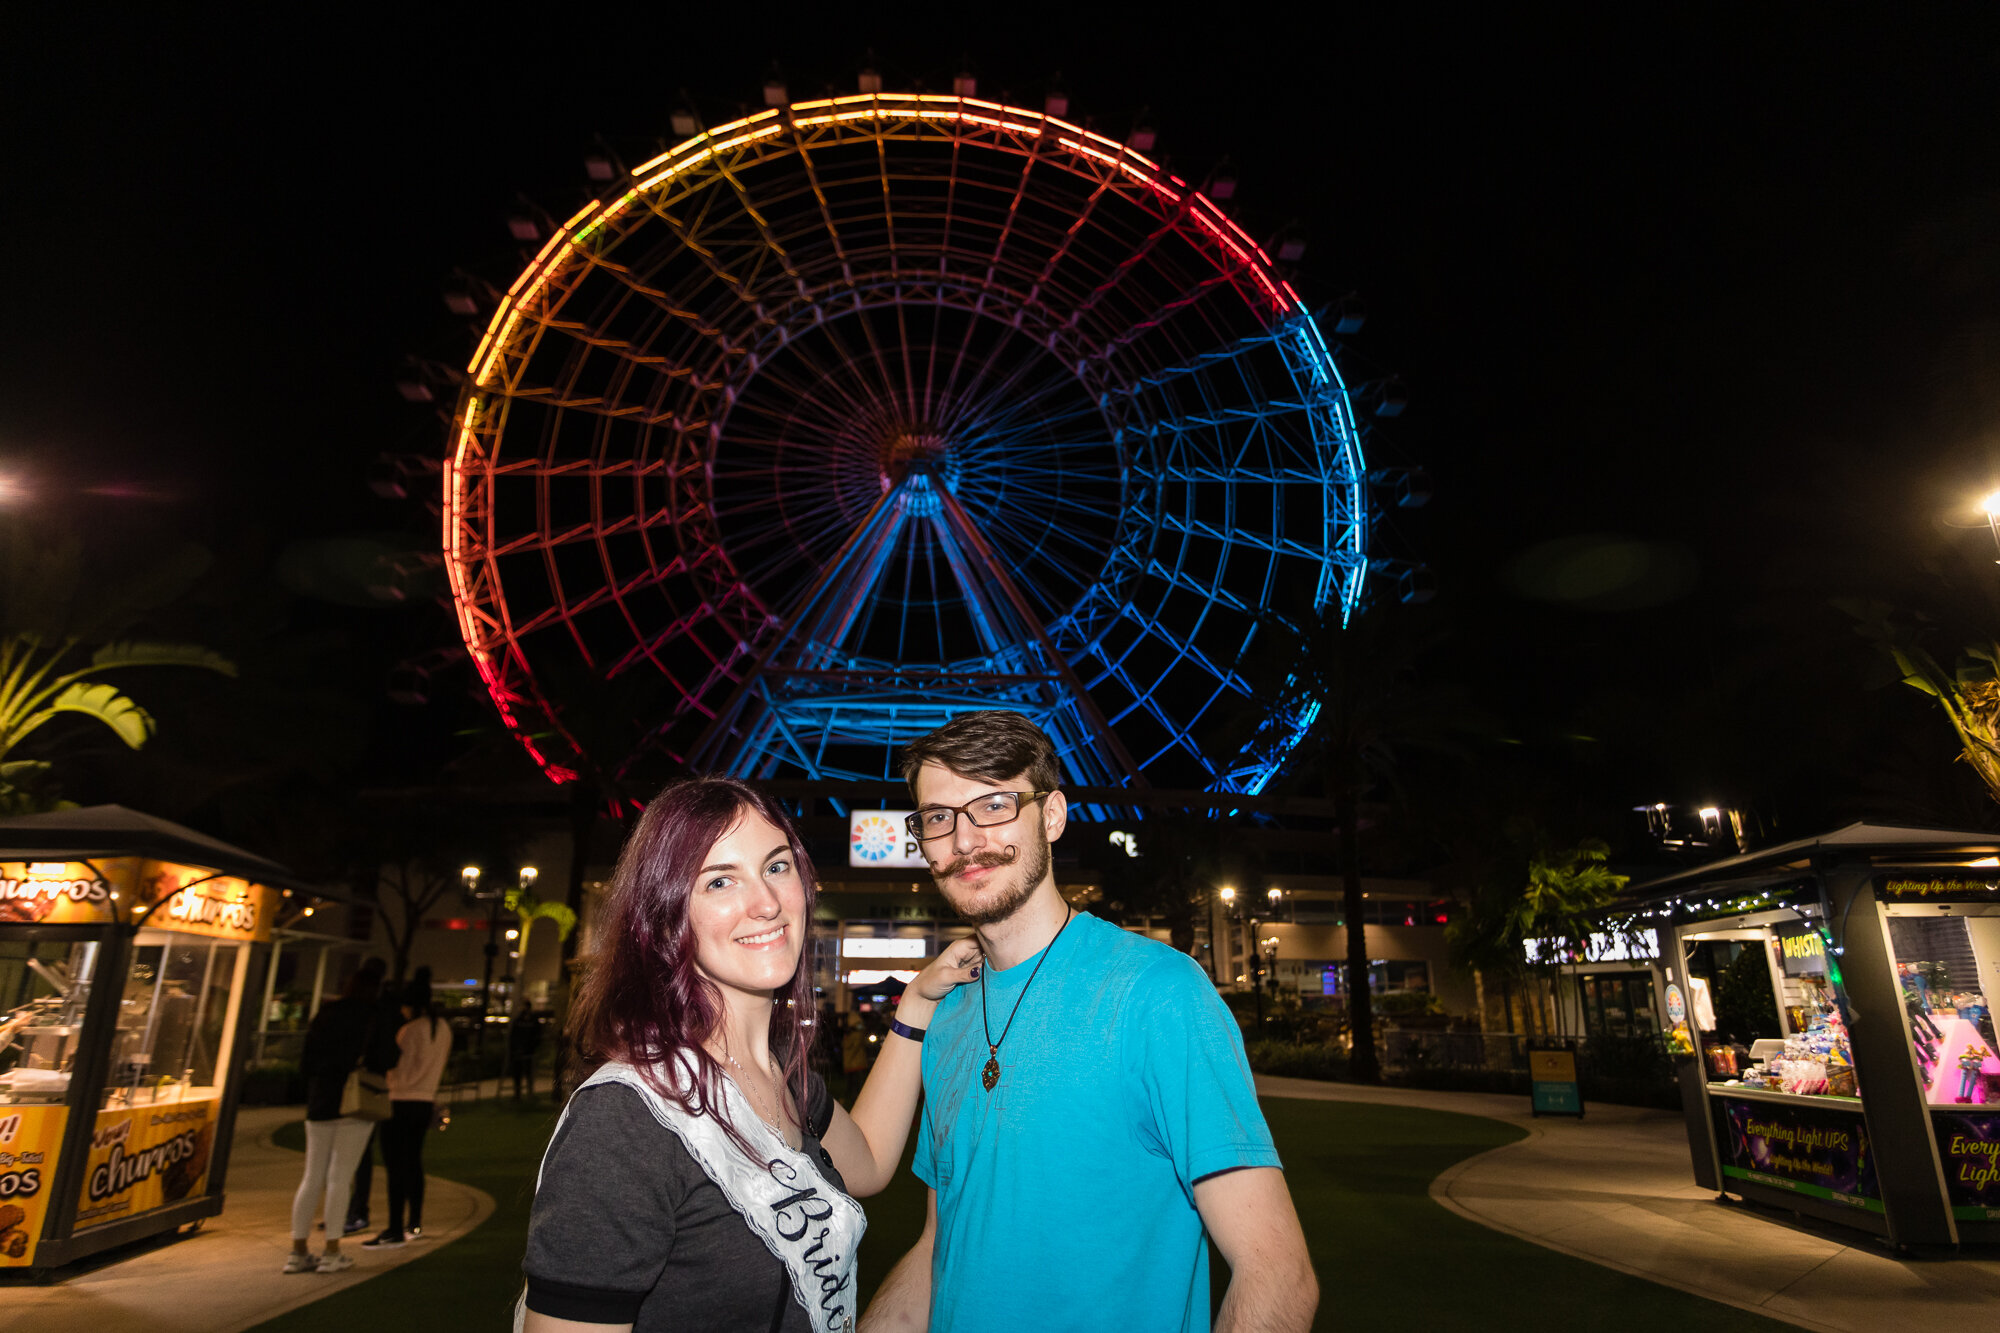  Preston and Rebecca's The Wheel at ICON Park Orlando, Florida Marriage Proposal 